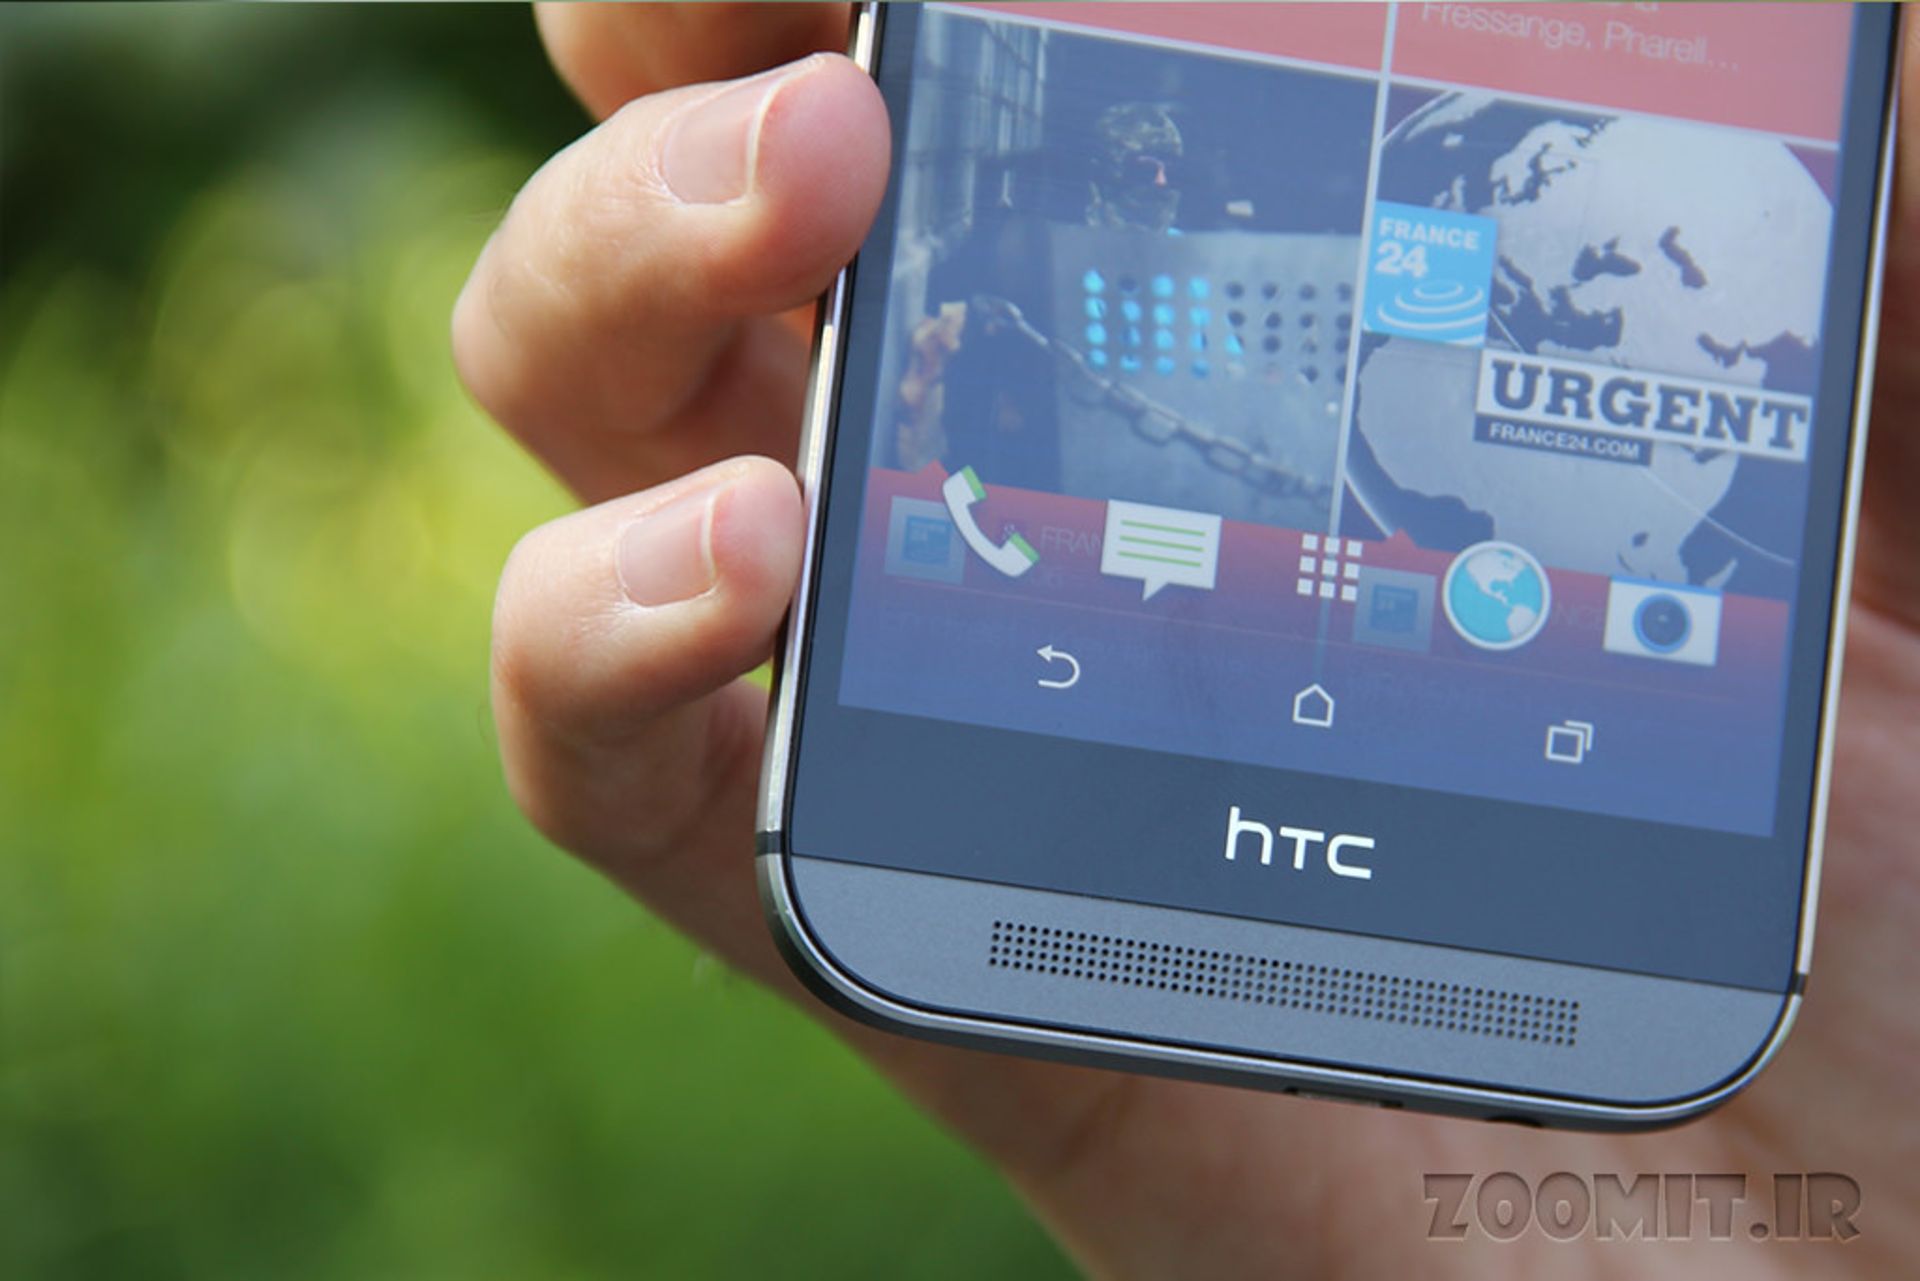 HTC One M8 Speaker